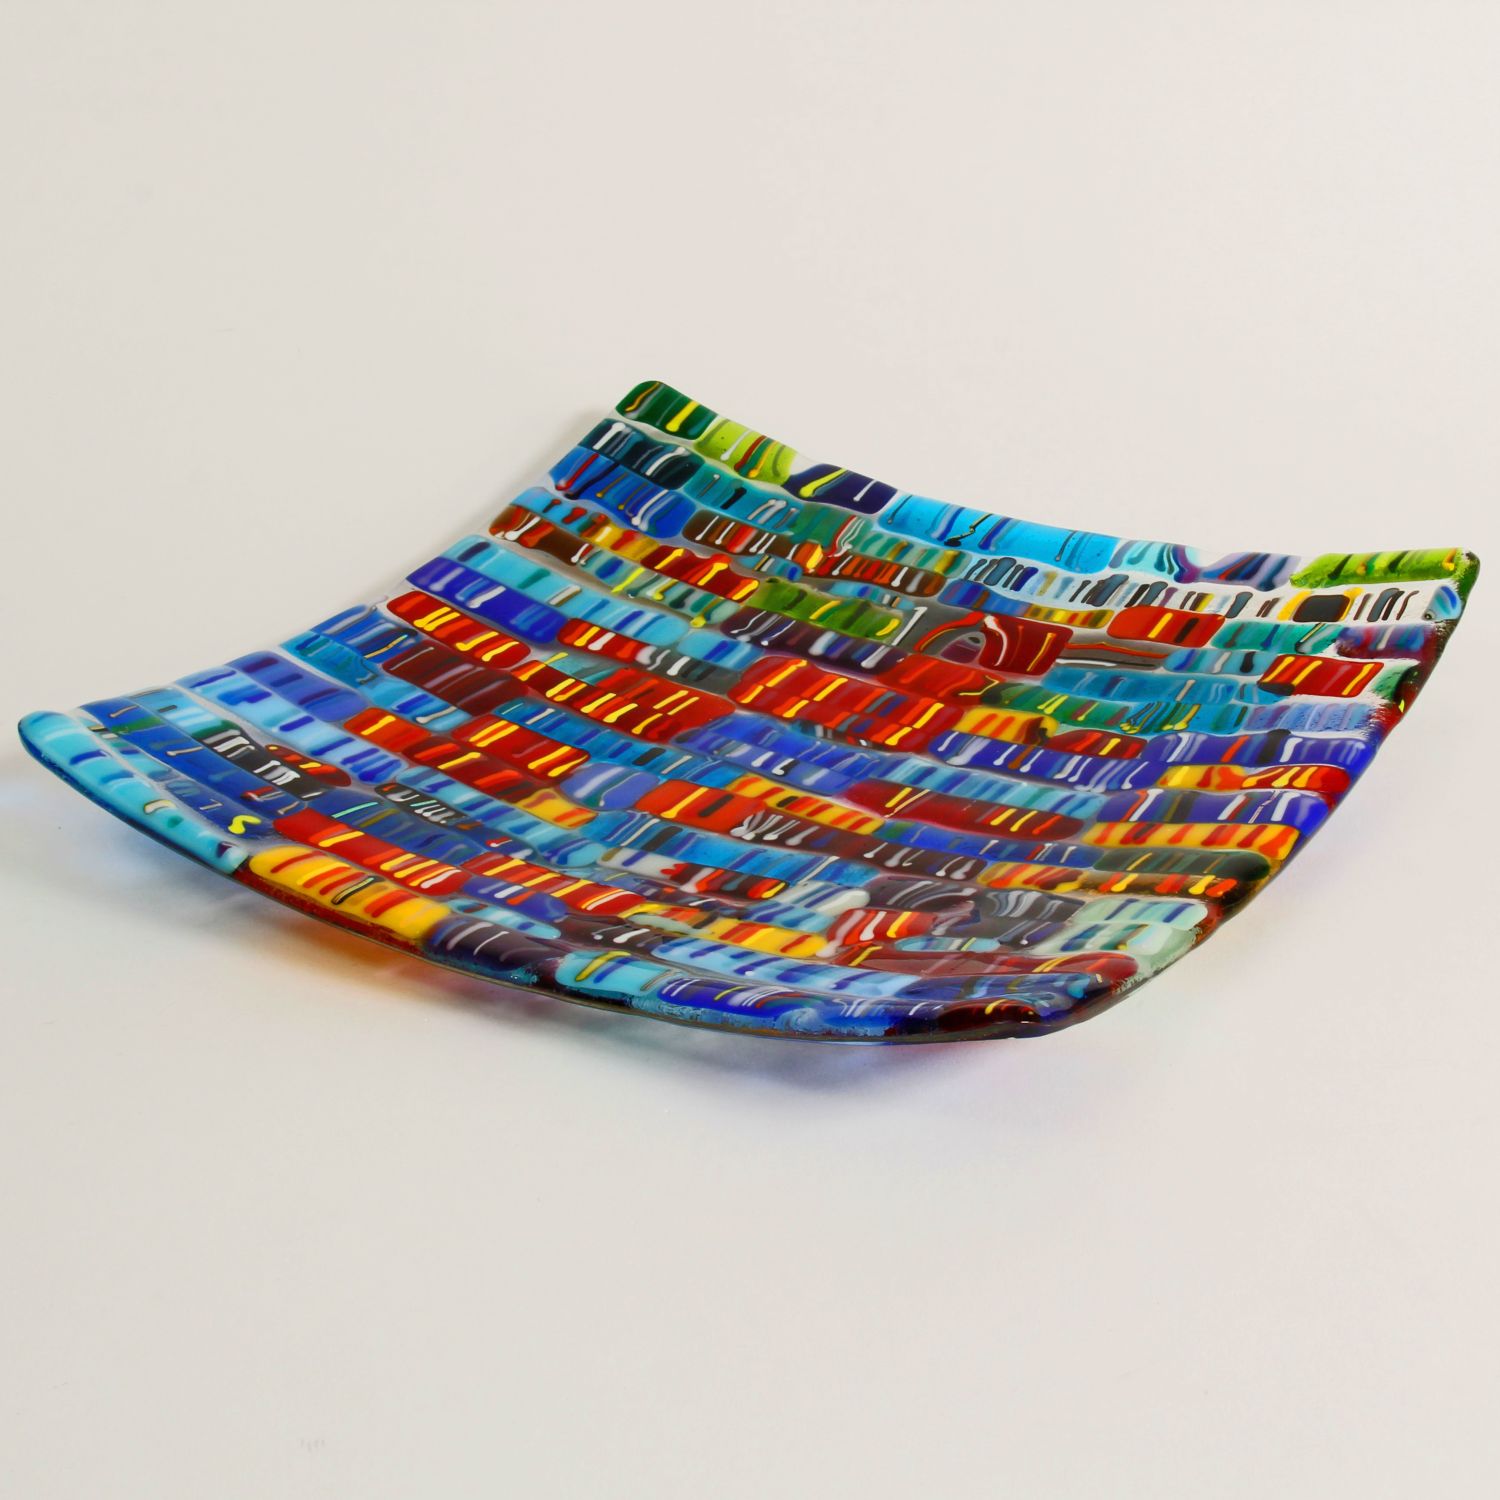 Trio Design Glassware:10 inch Tray in Rainbow Colour Product Image 2 of 2